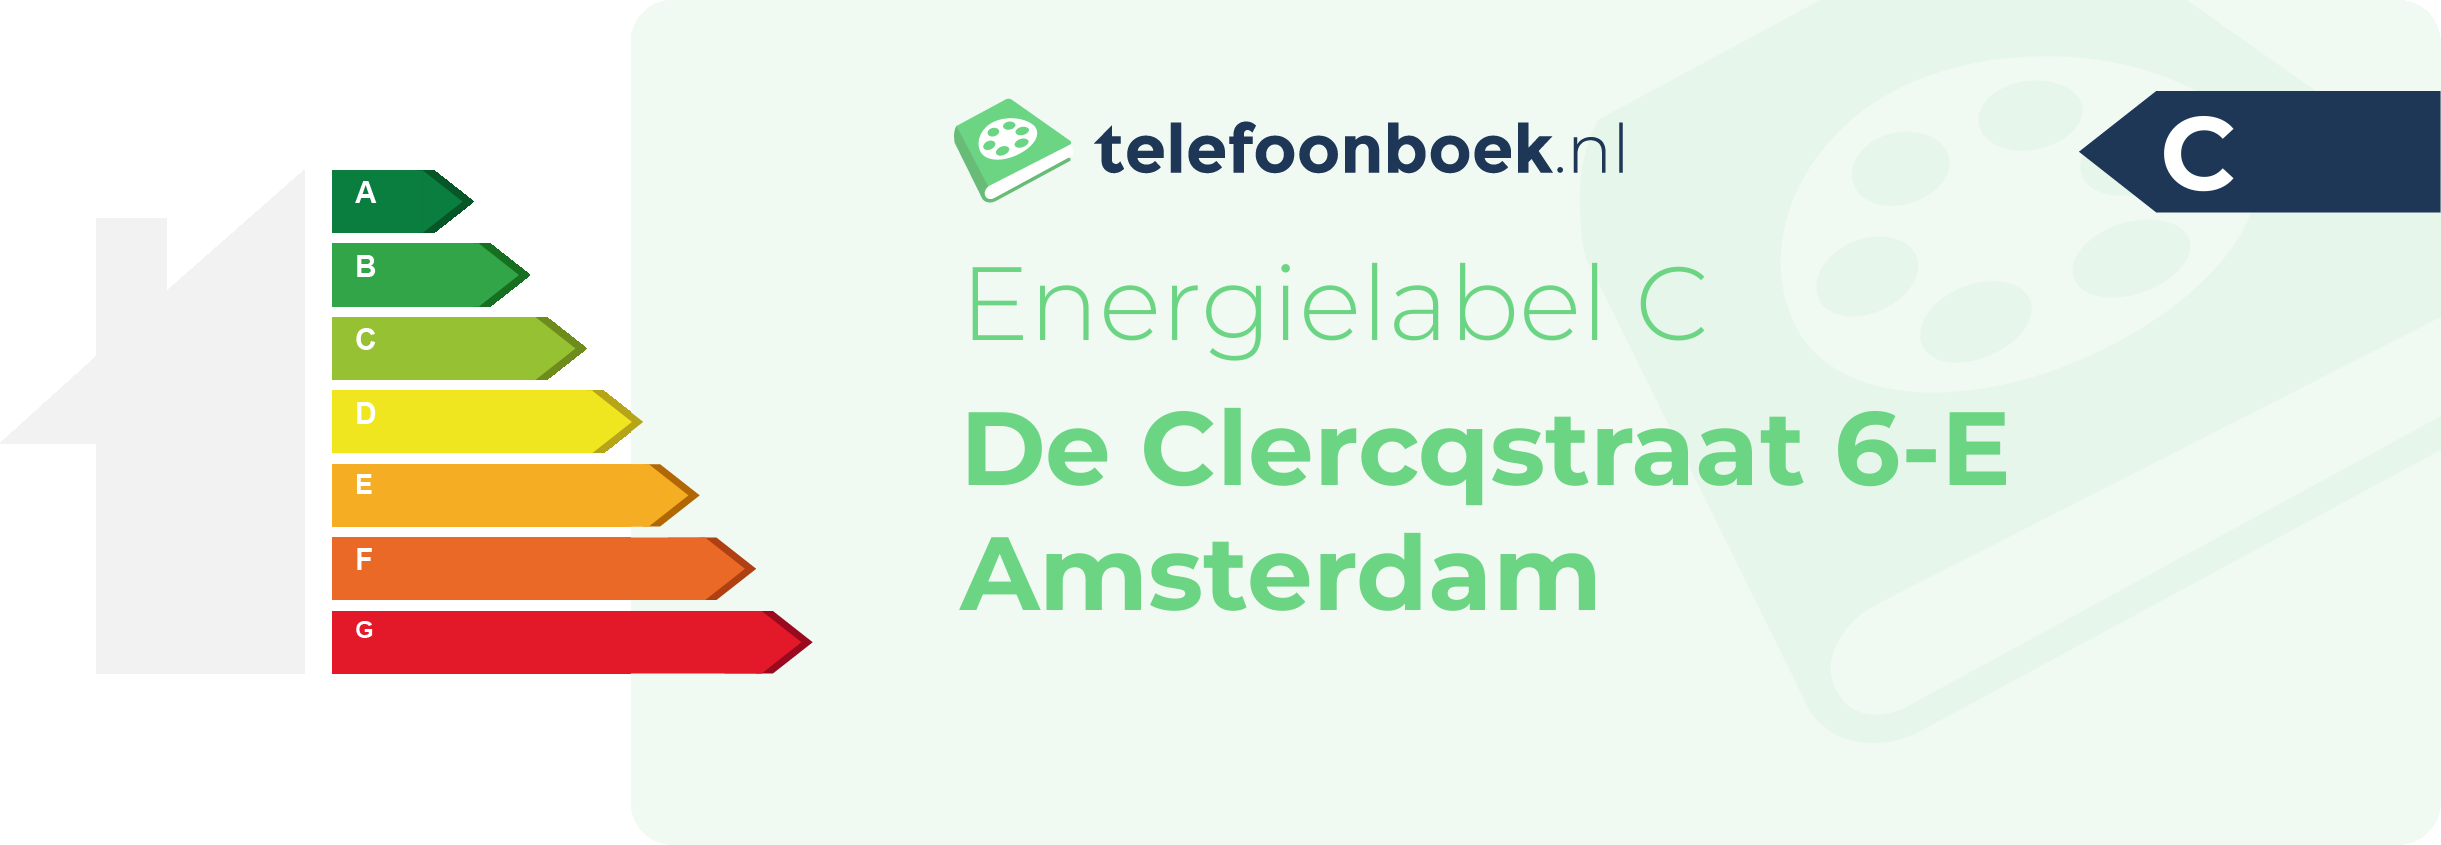 Energielabel De Clercqstraat 6-E Amsterdam